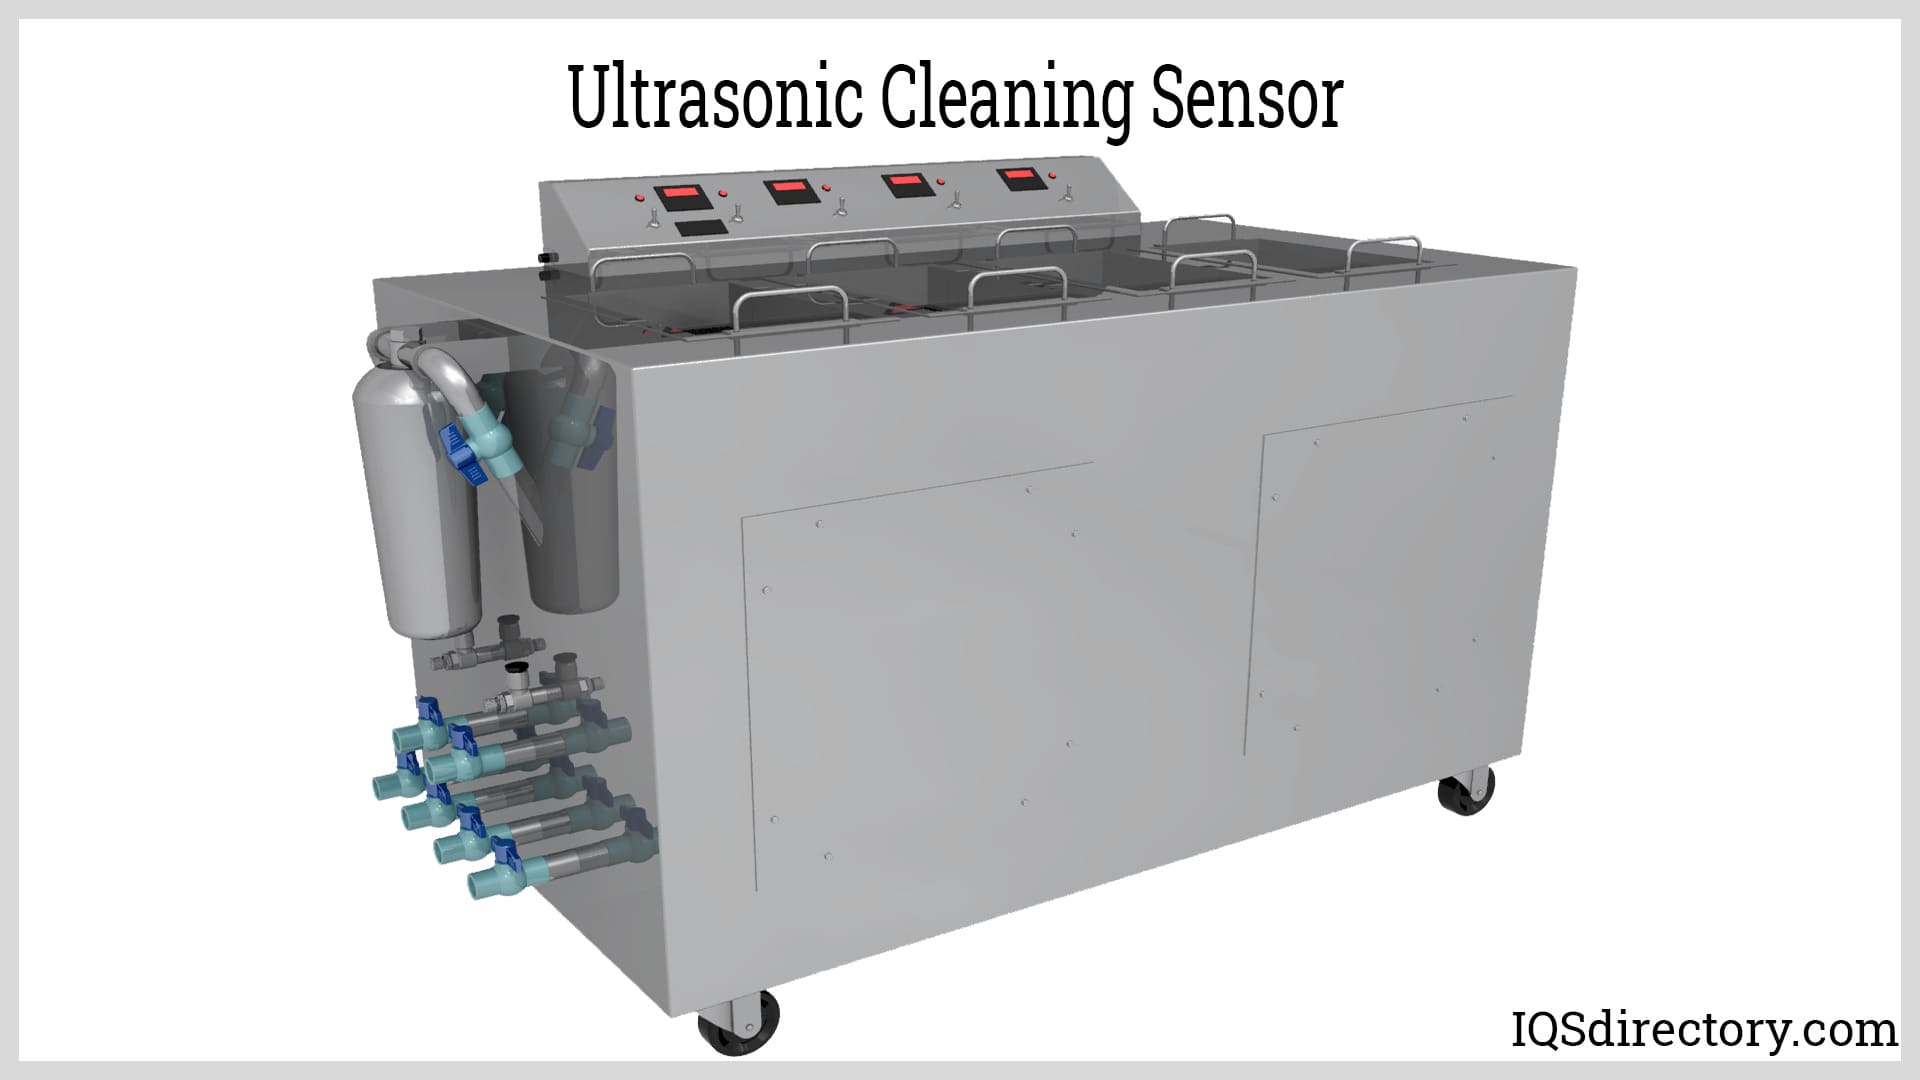 Ultrasonic Cleaning Sensor